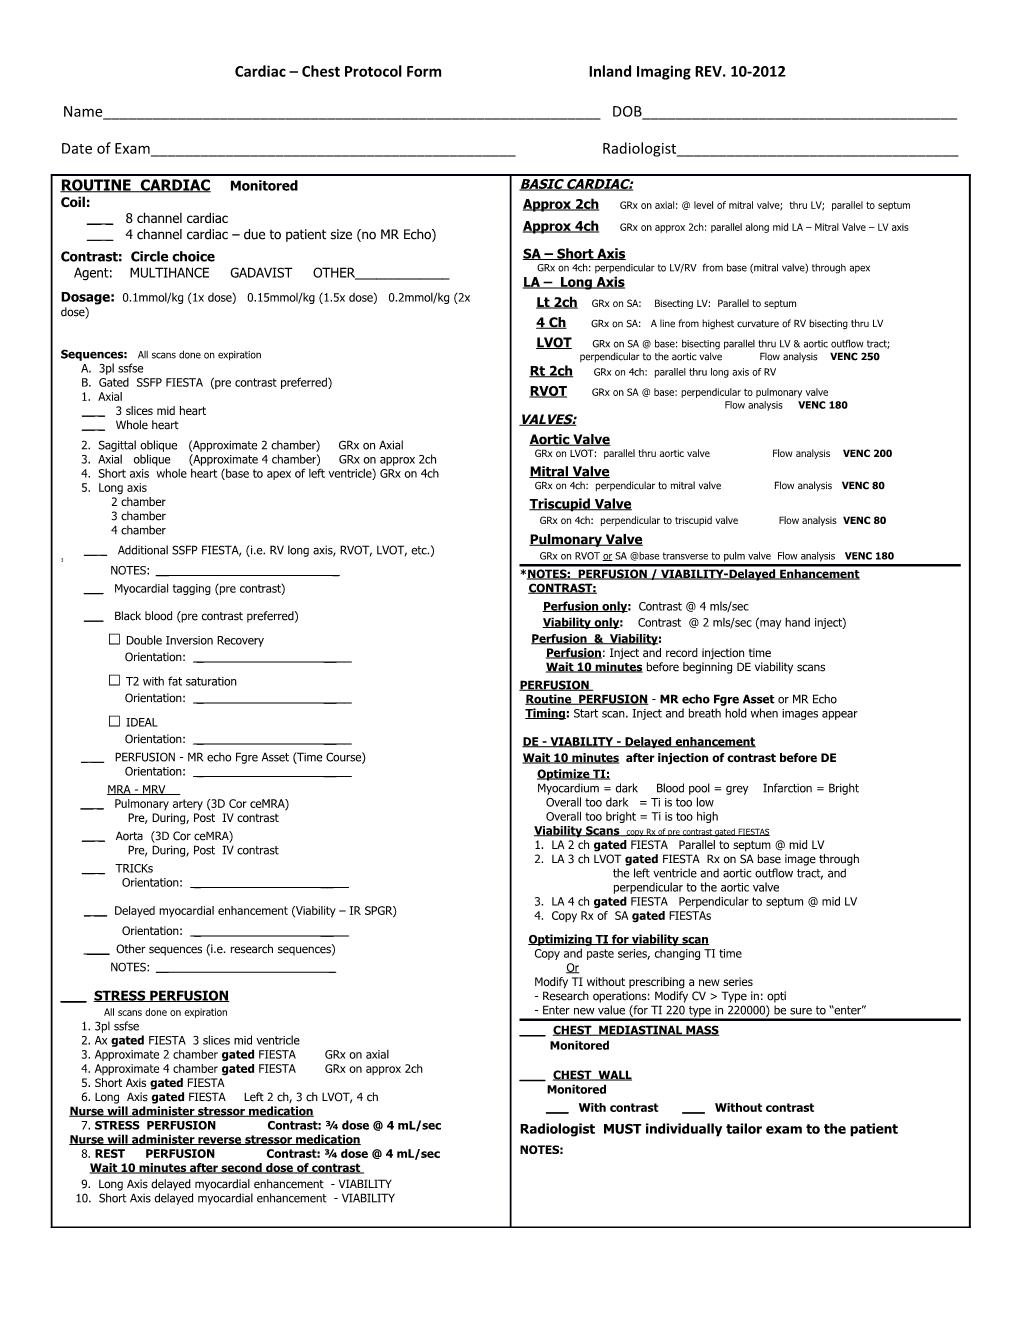 Cardiac Chest Protocol Form Inland Imaging REV. 10-2012